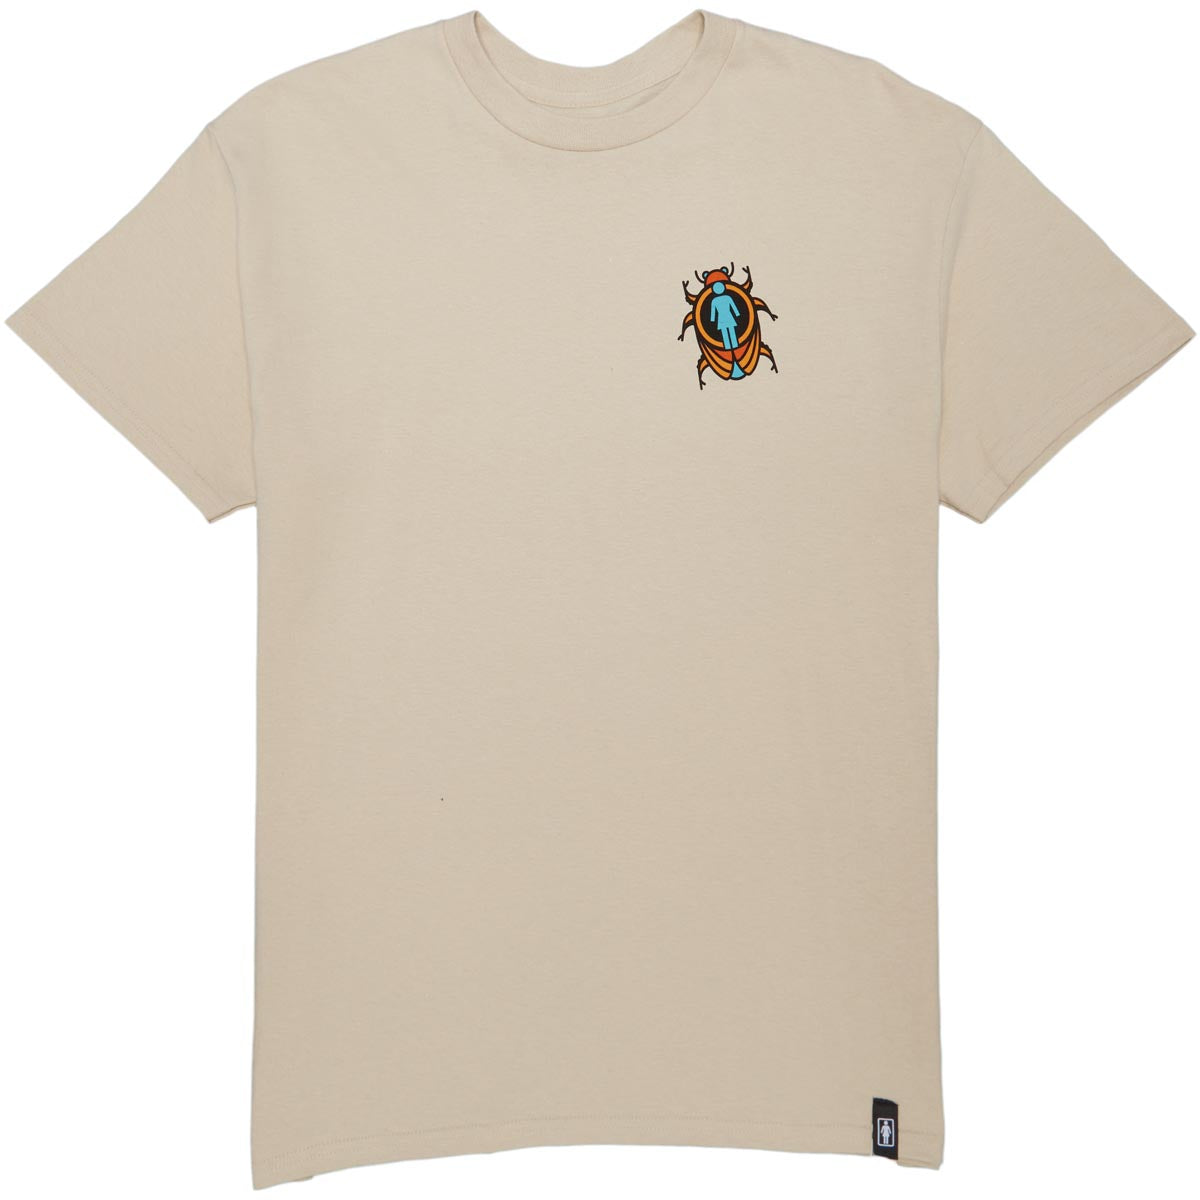 Girl Beetle Boss T-Shirt - Sand image 1